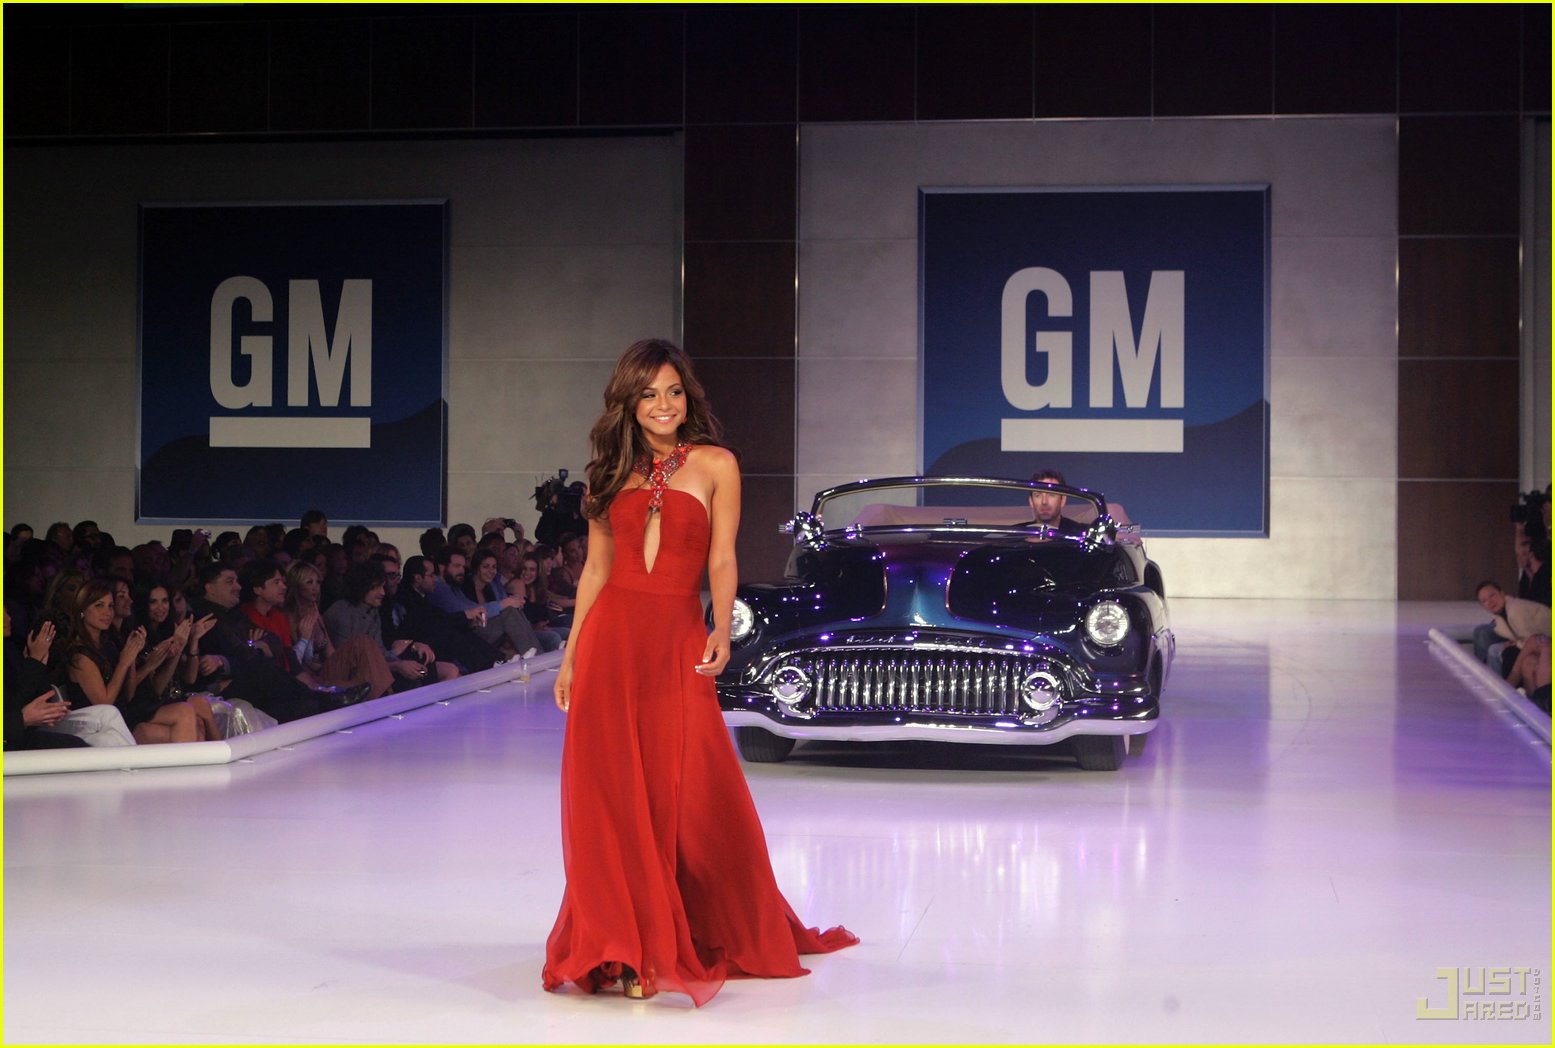 General Motor’s Celebrity Fashion Show — The 2007 GM “Ten” Runway